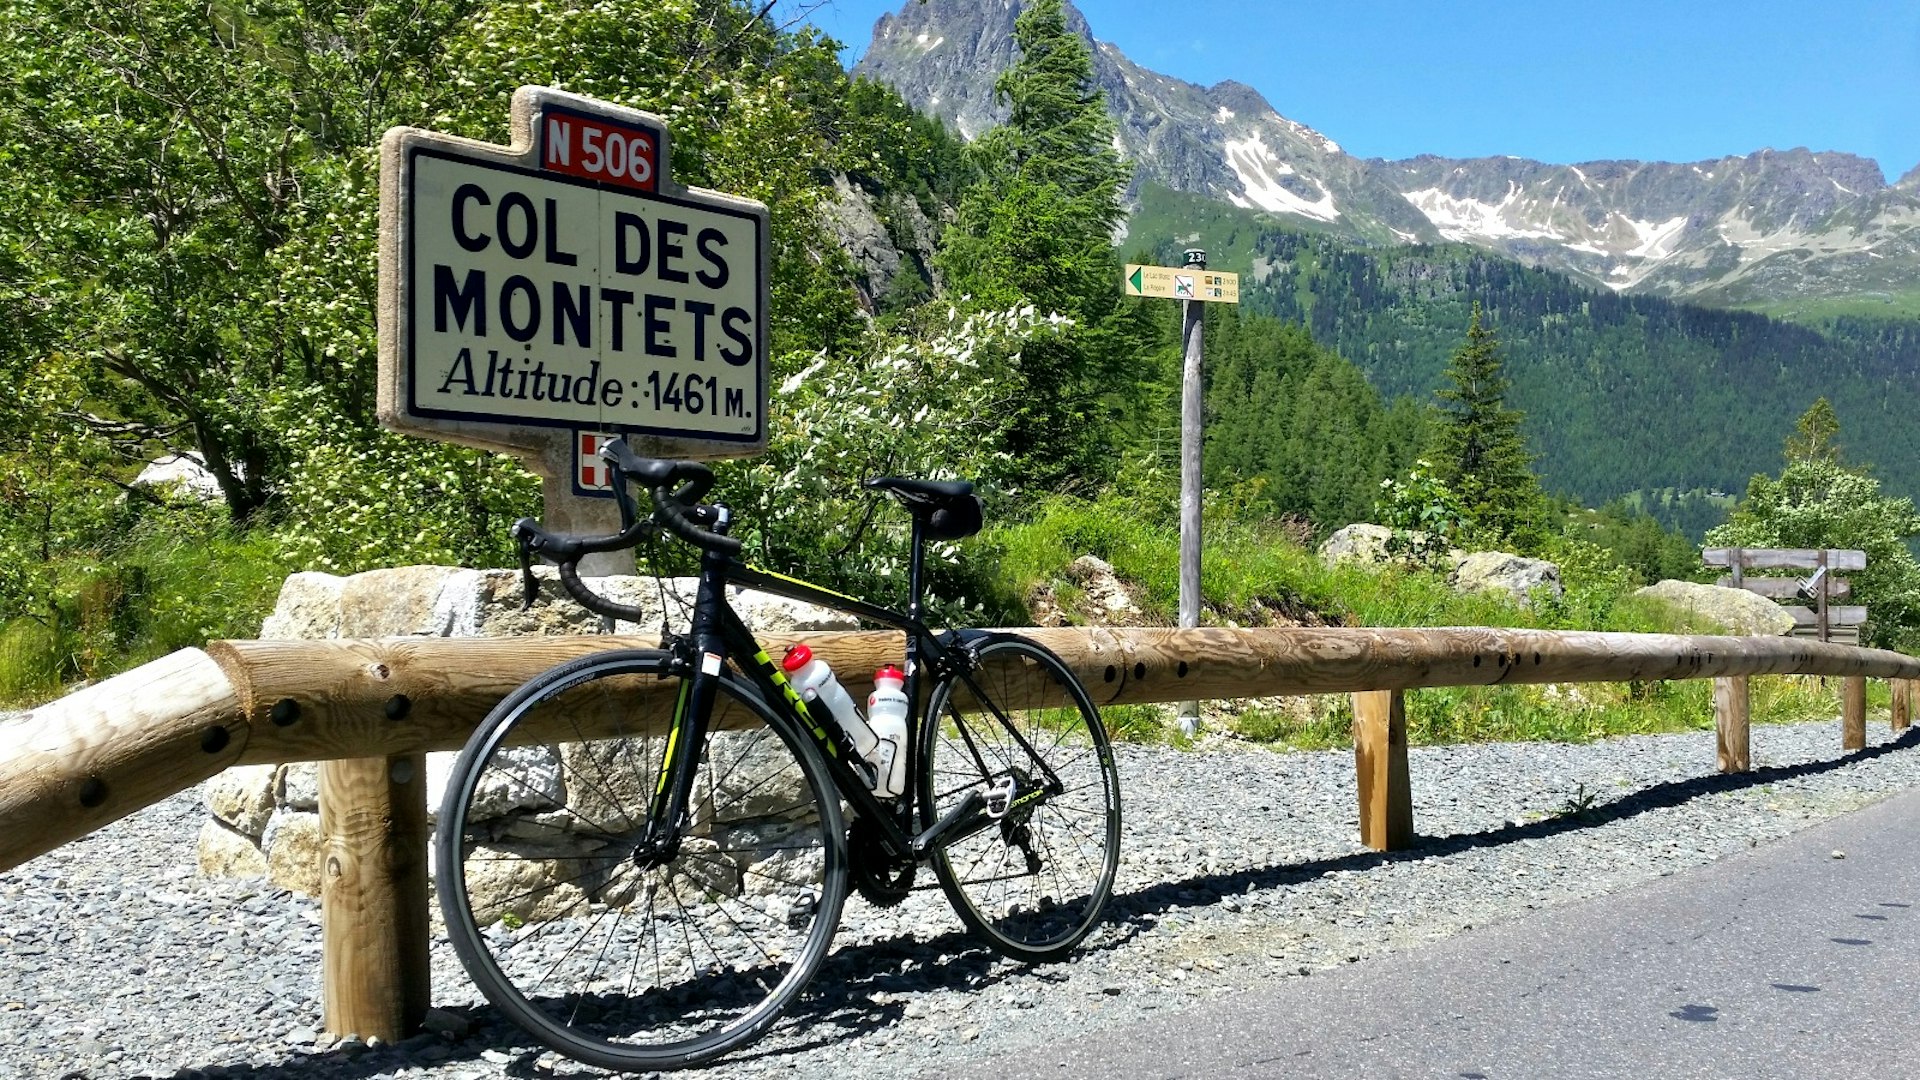 The Col des Montets summit near Chamonix. Image © David Else / Lonely Planet